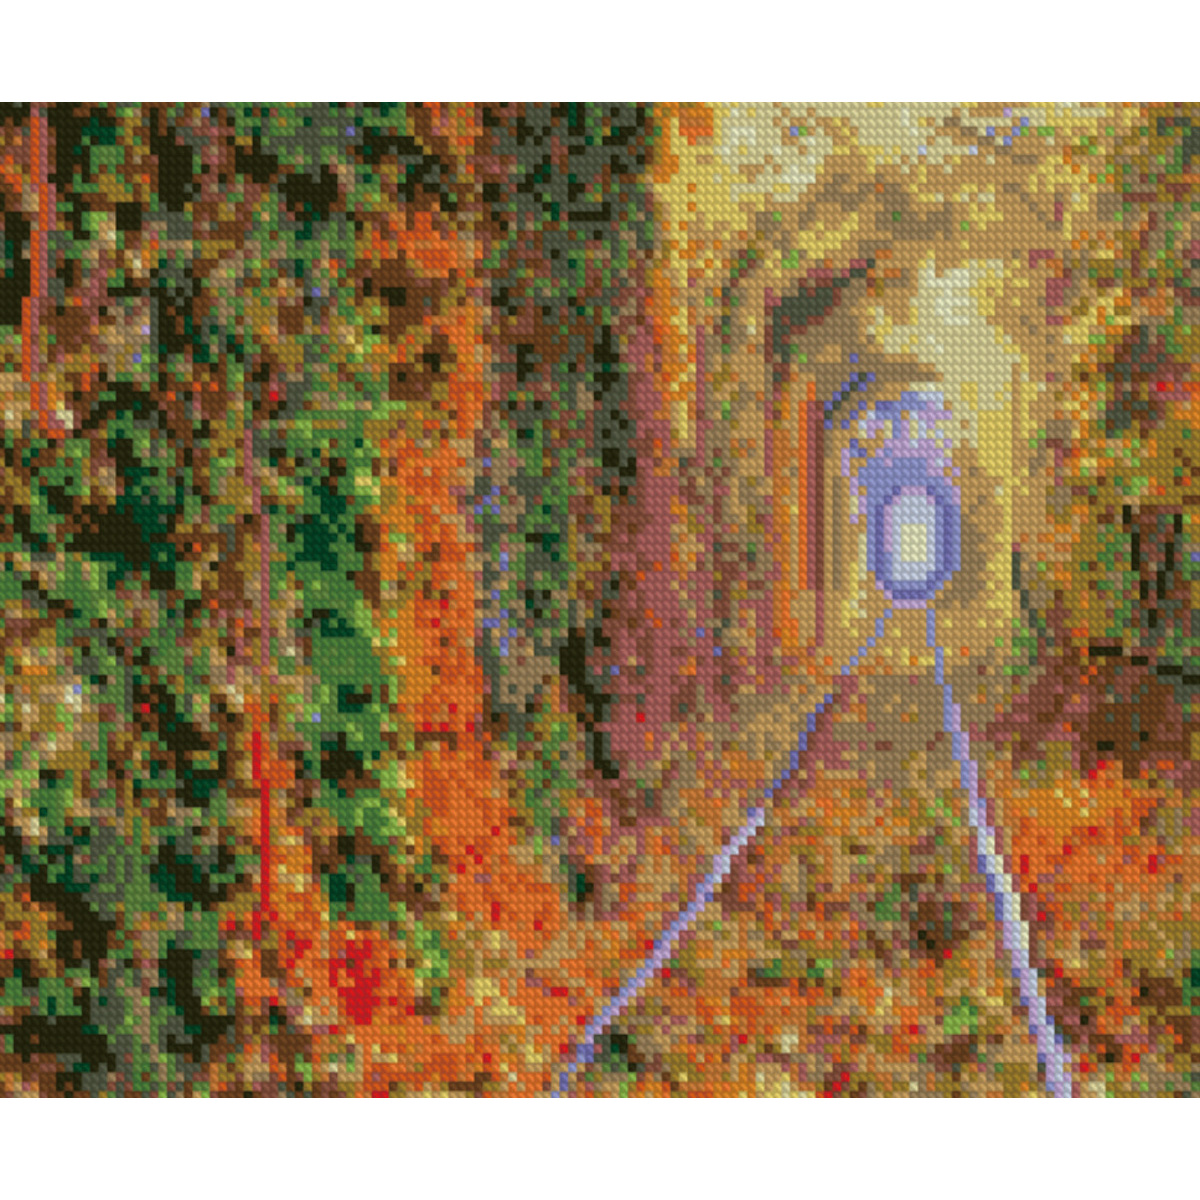 Diamond mosaic Premium HX145 "Autumn tunnel", size 30x40 cm